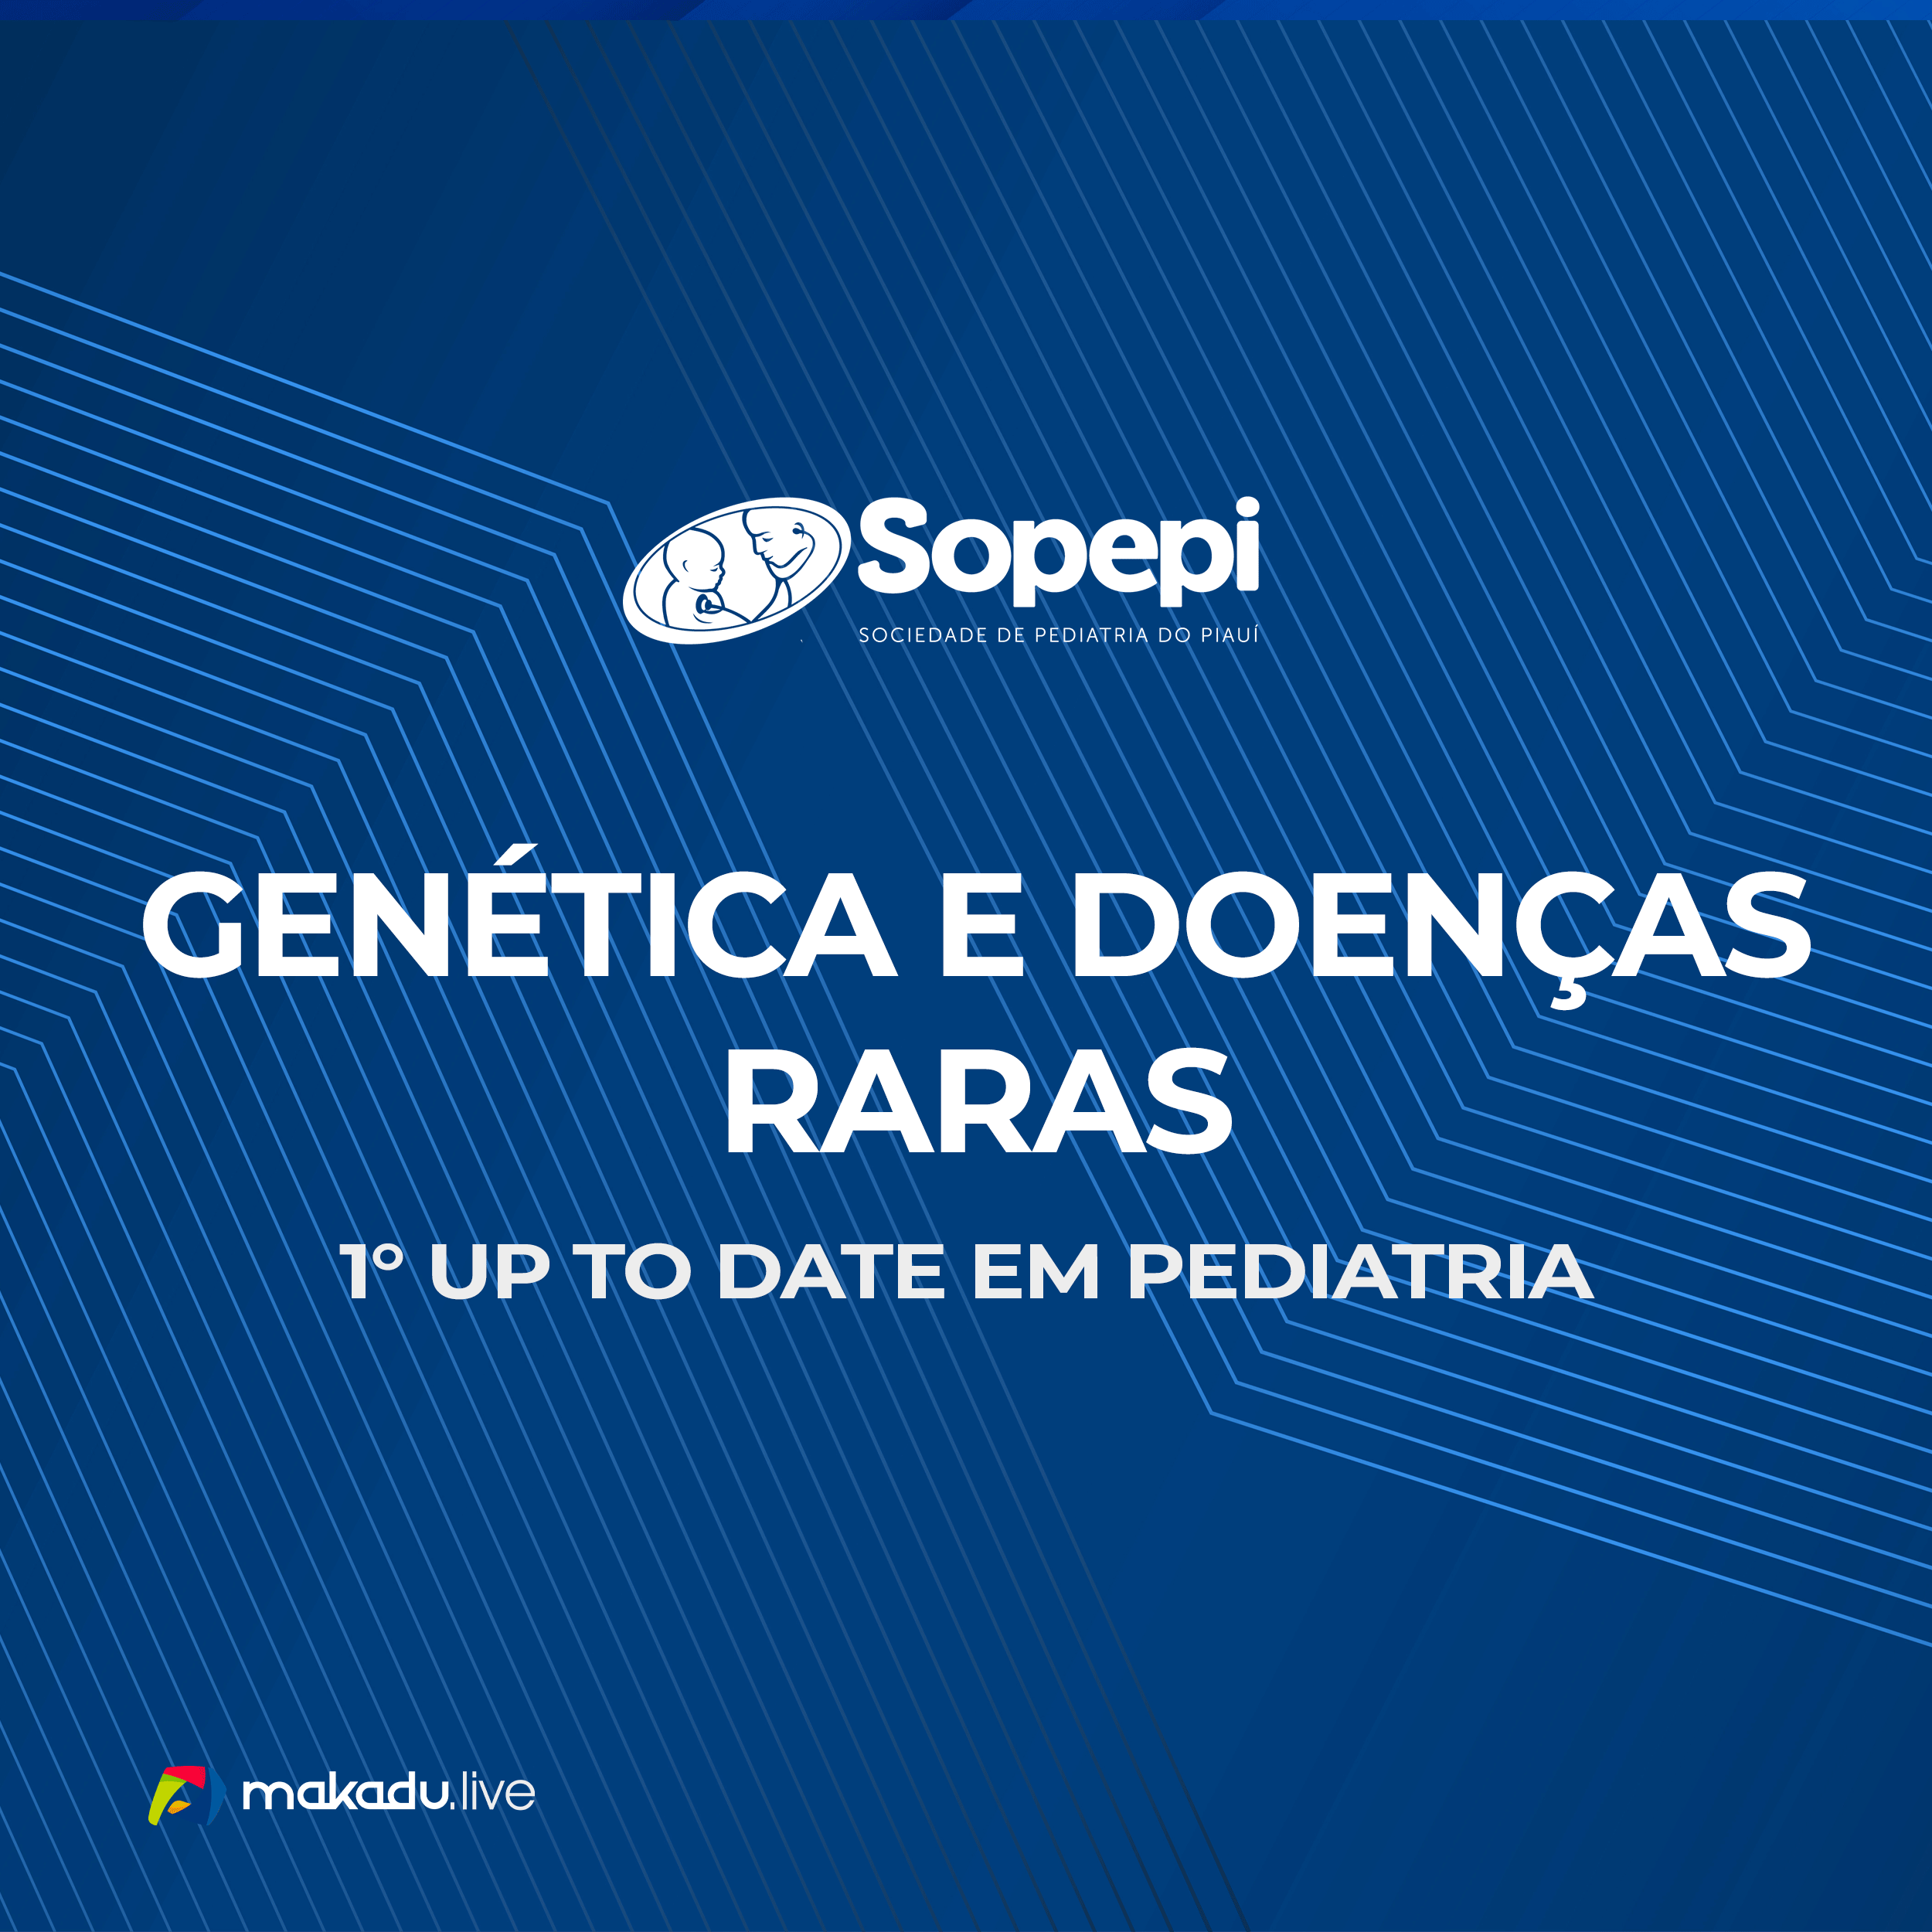 Sopepi Genetica - Whats